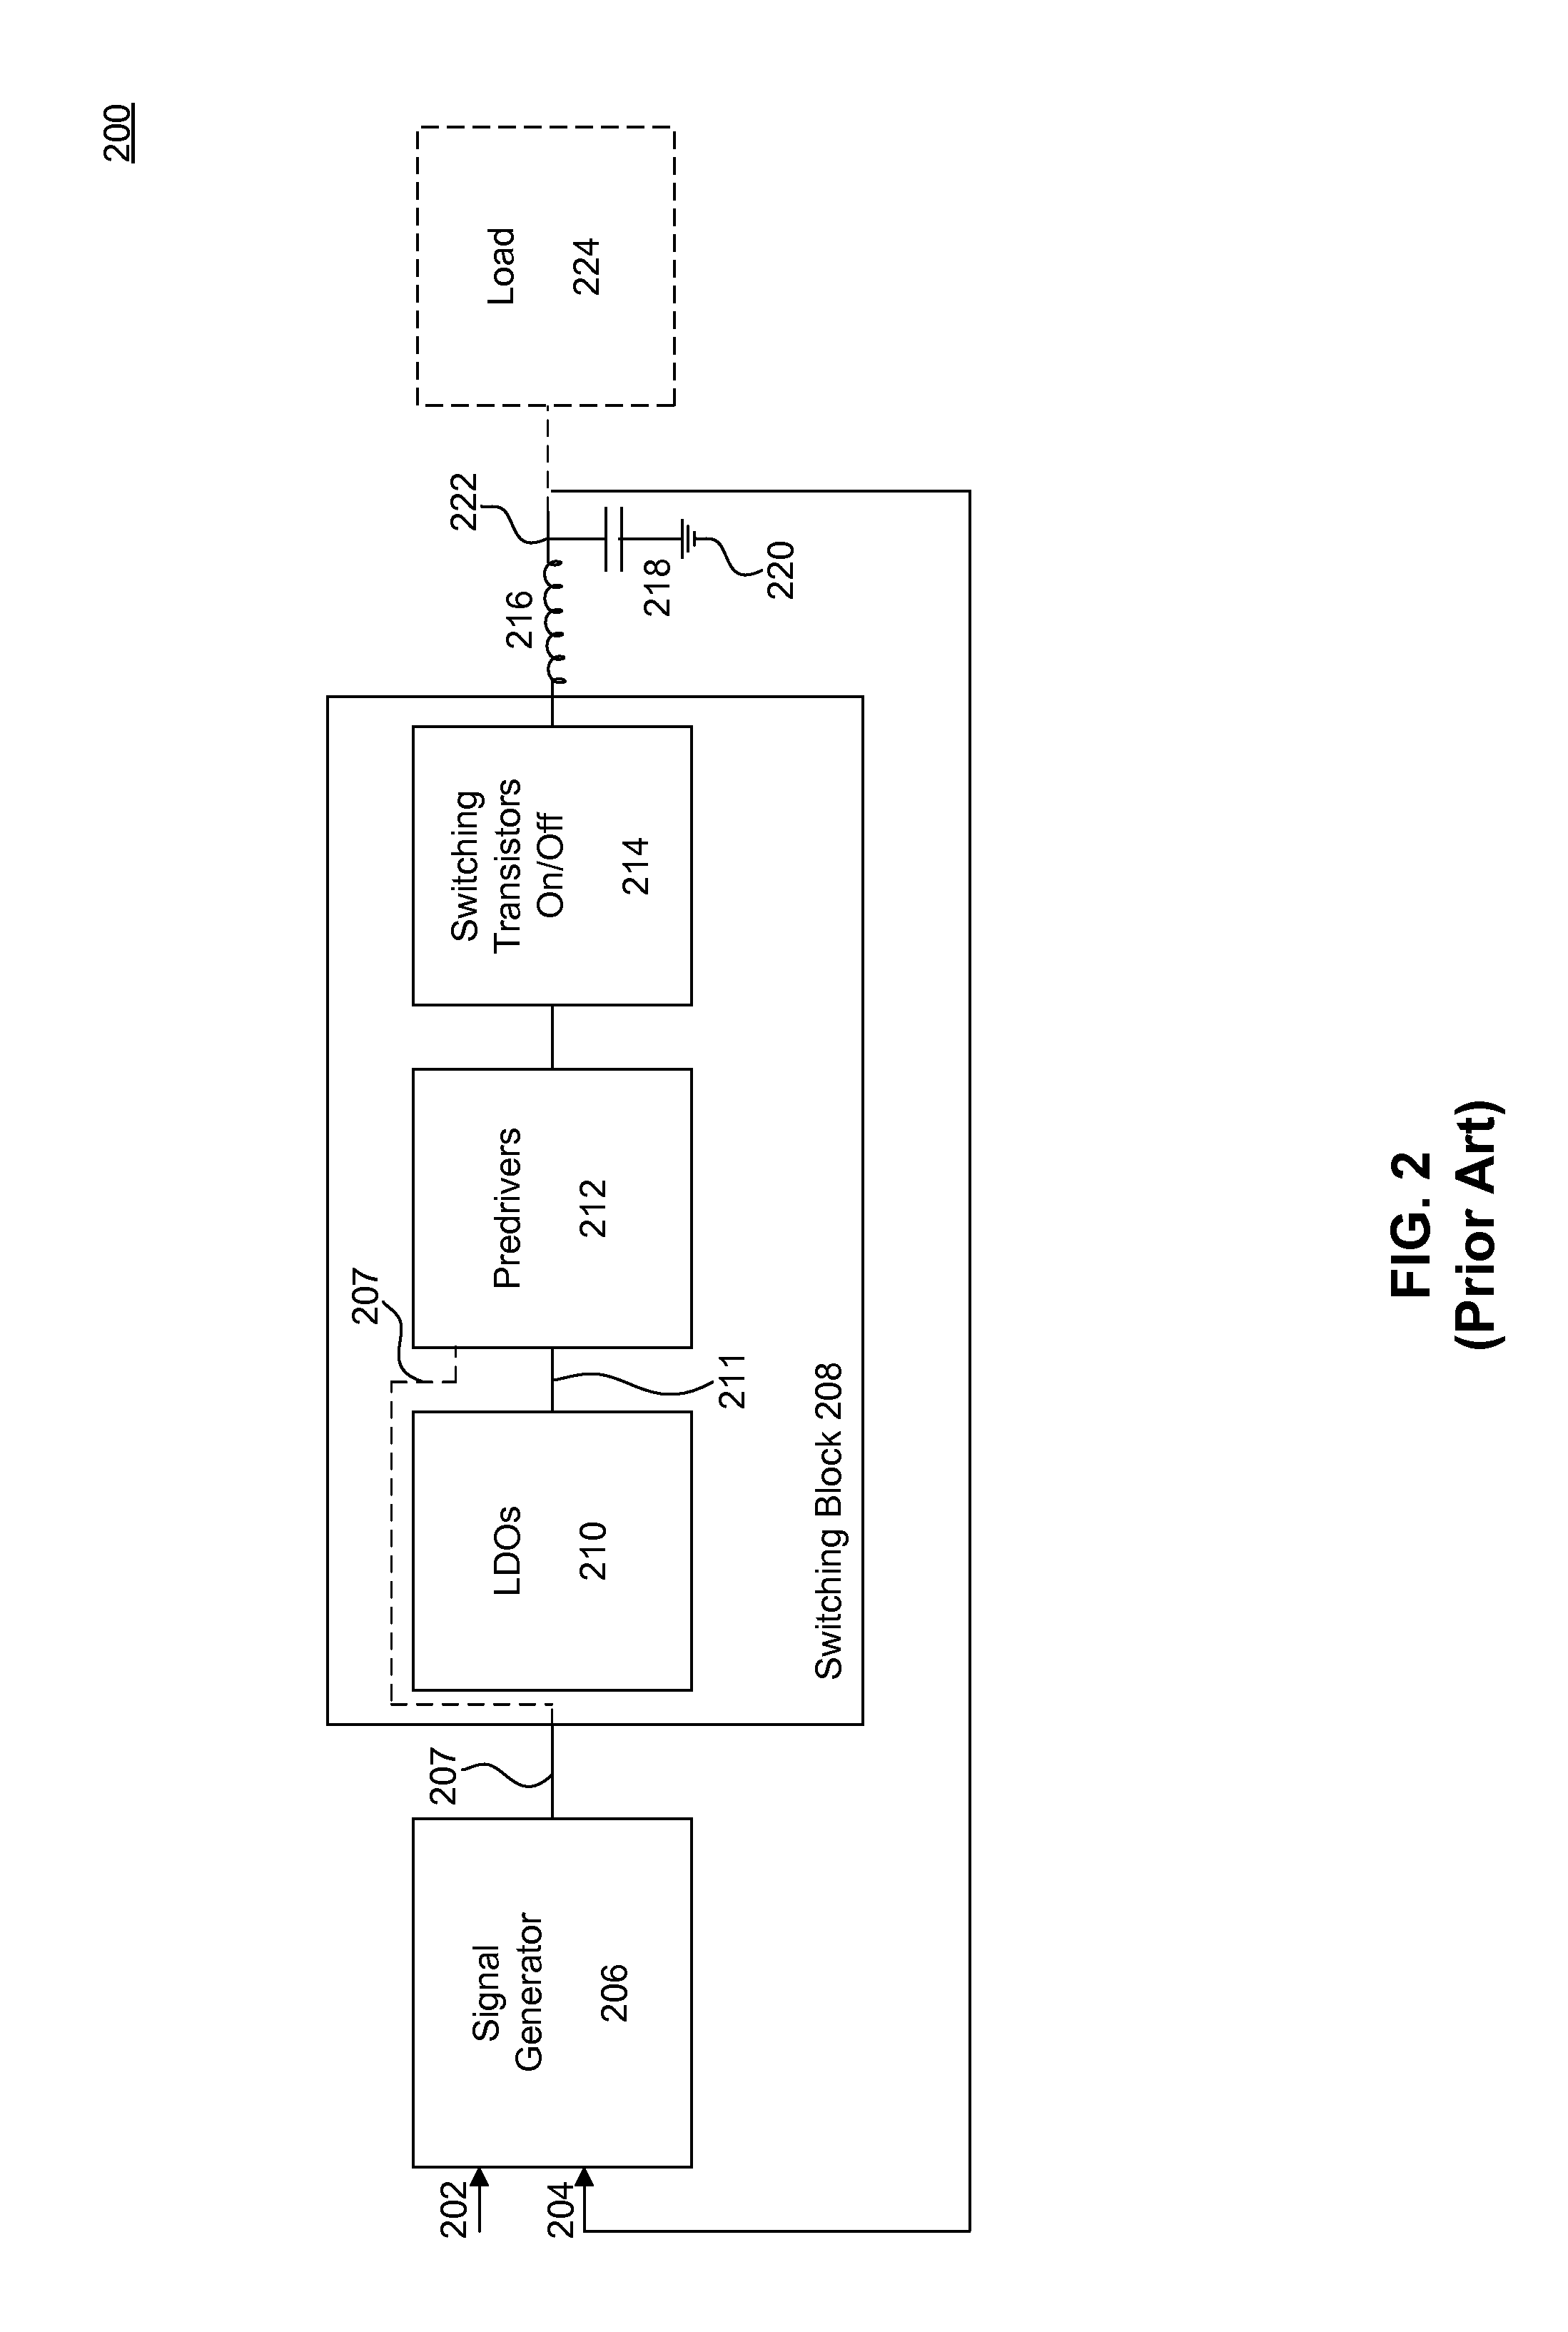 Internal capacitor linear regulator with transient dip compensator for internal-switch switching regulator